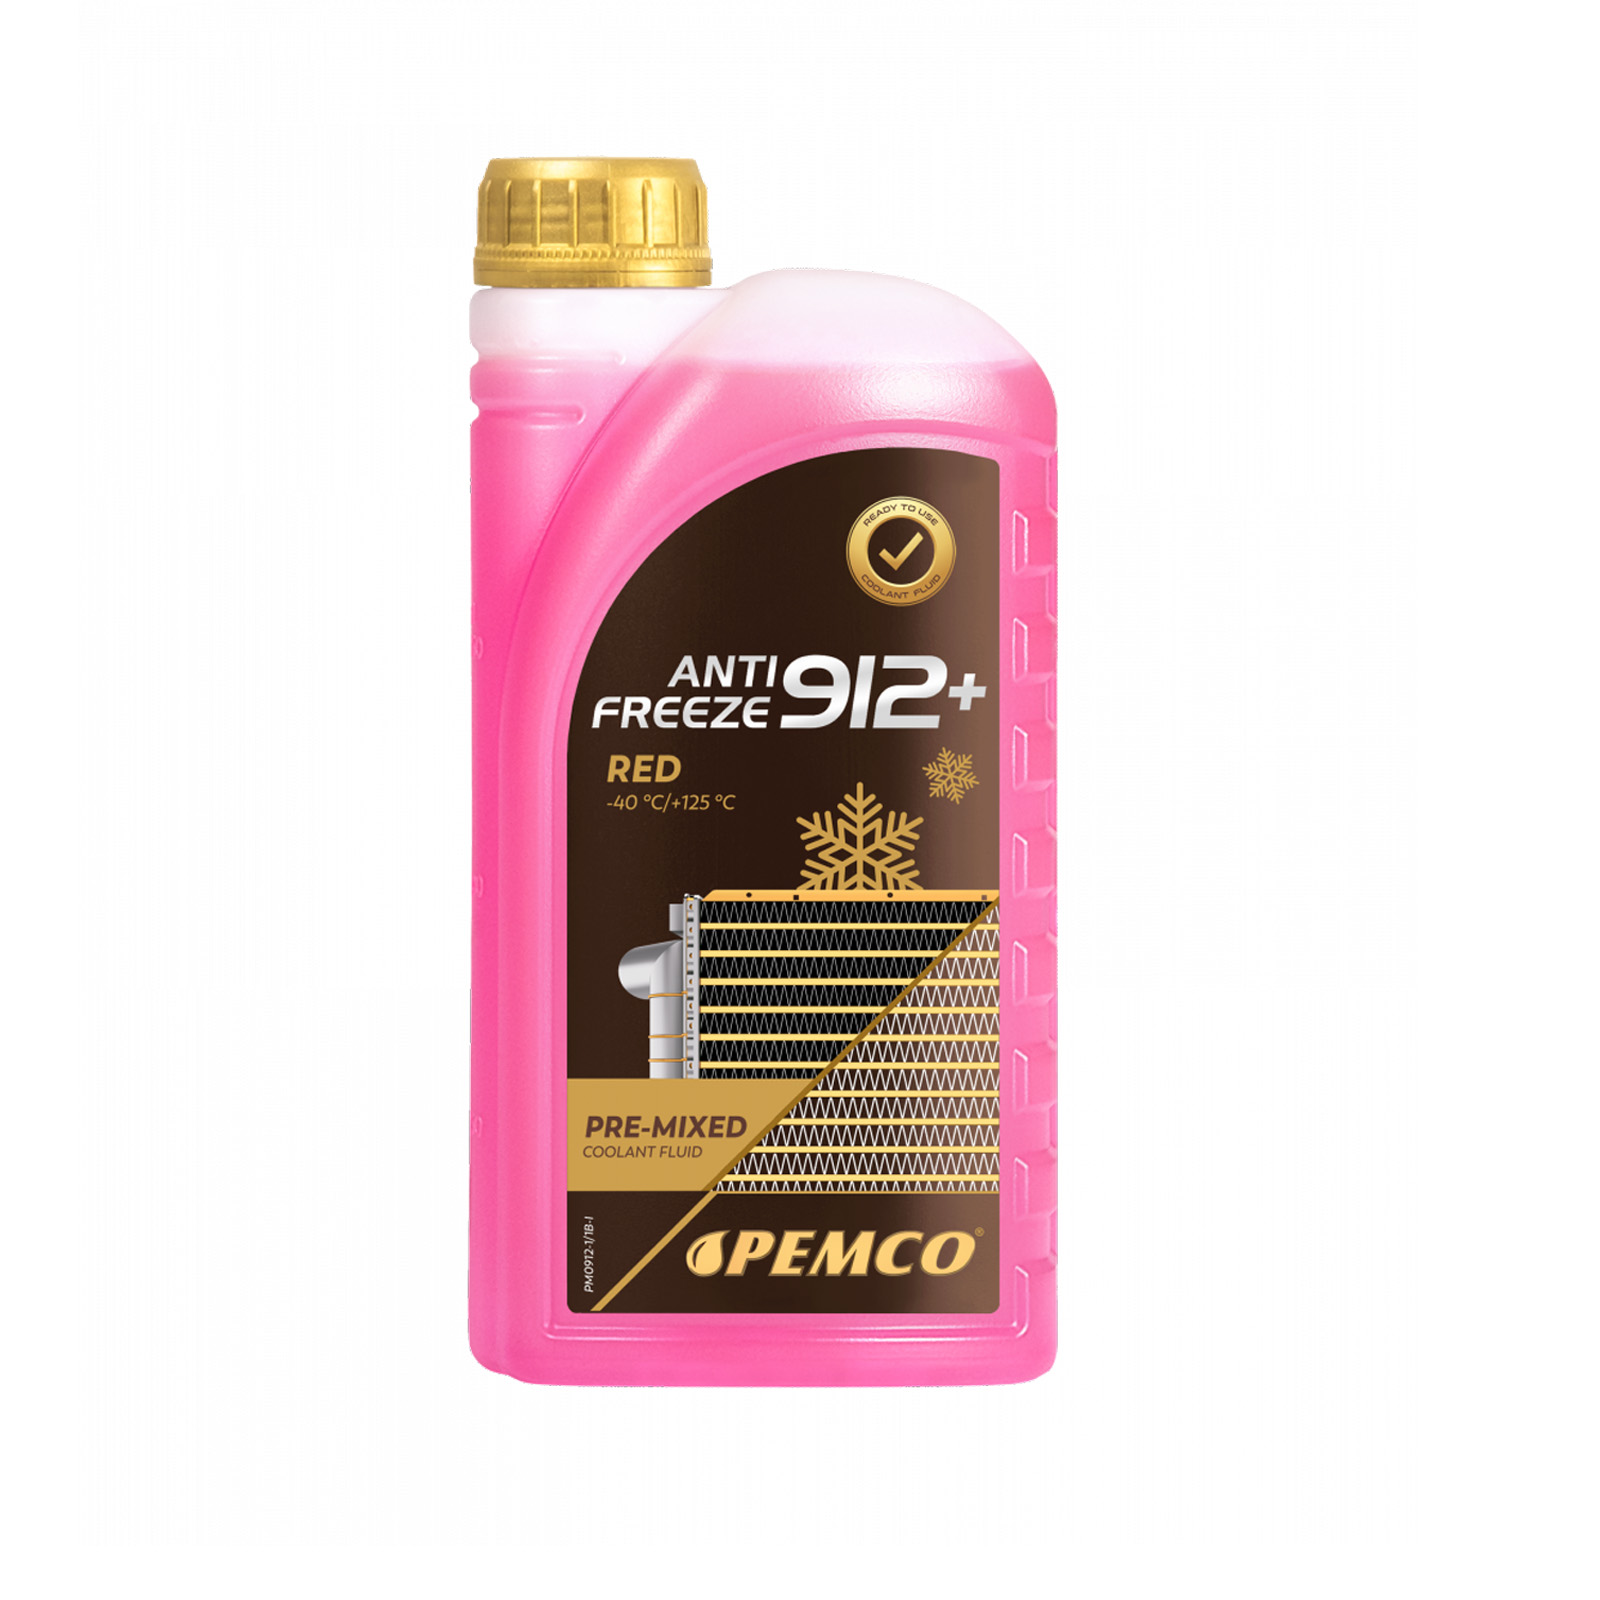 1 Liter PEMCO Antifreeze 912+ Kühler Frostschutz bis -40C rosa rot violett